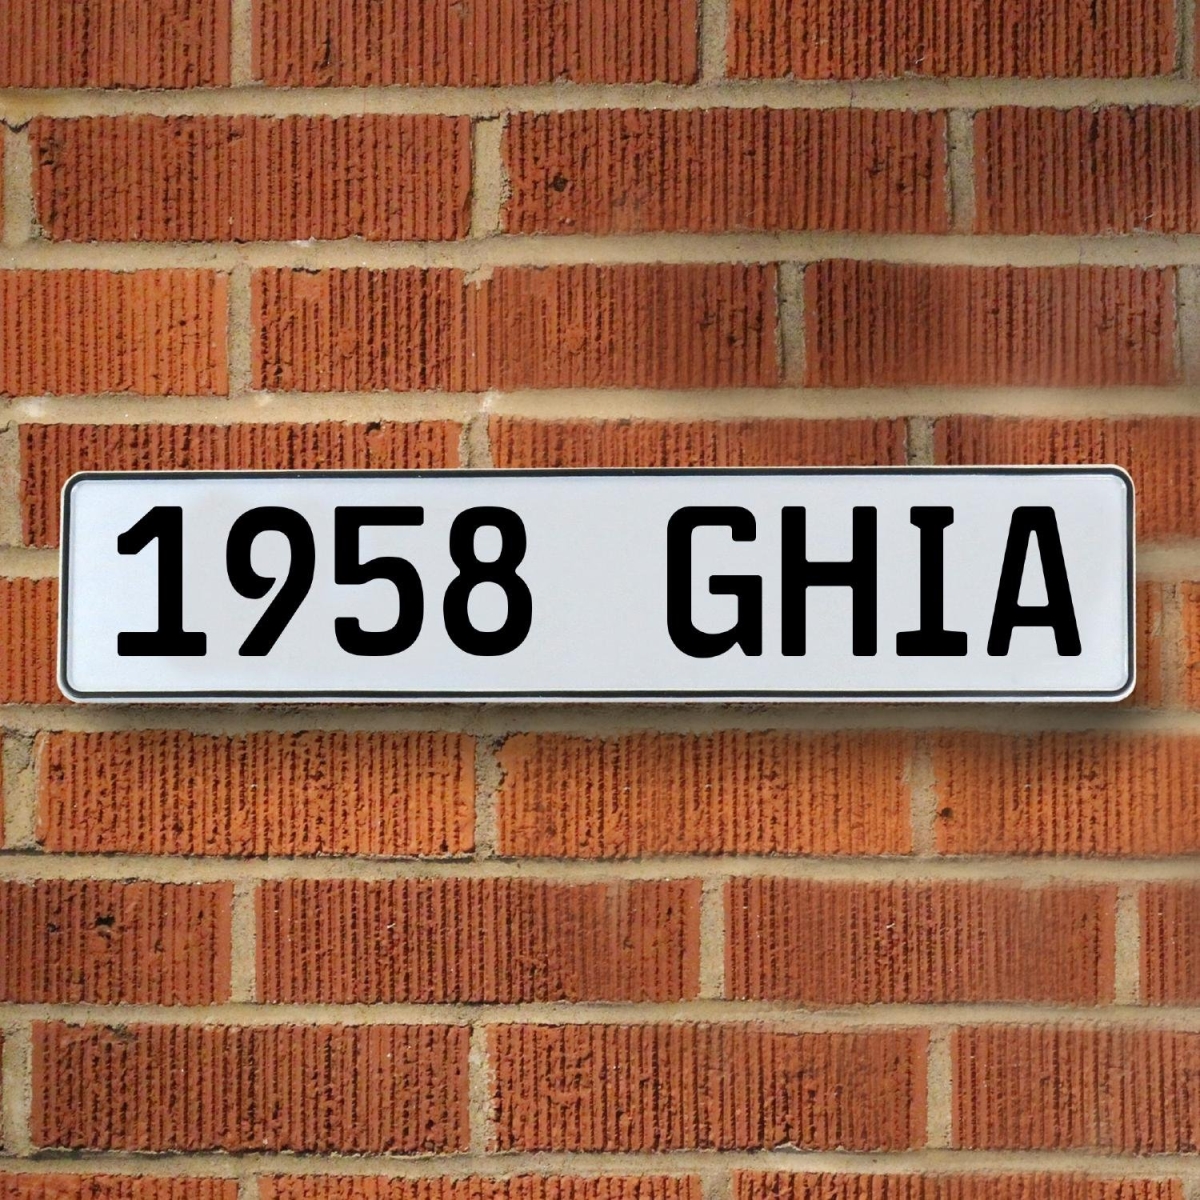 785921 1958 Ghia - White Aluminum Street Sign Mancave Euro Plate Name Door Sign Wall